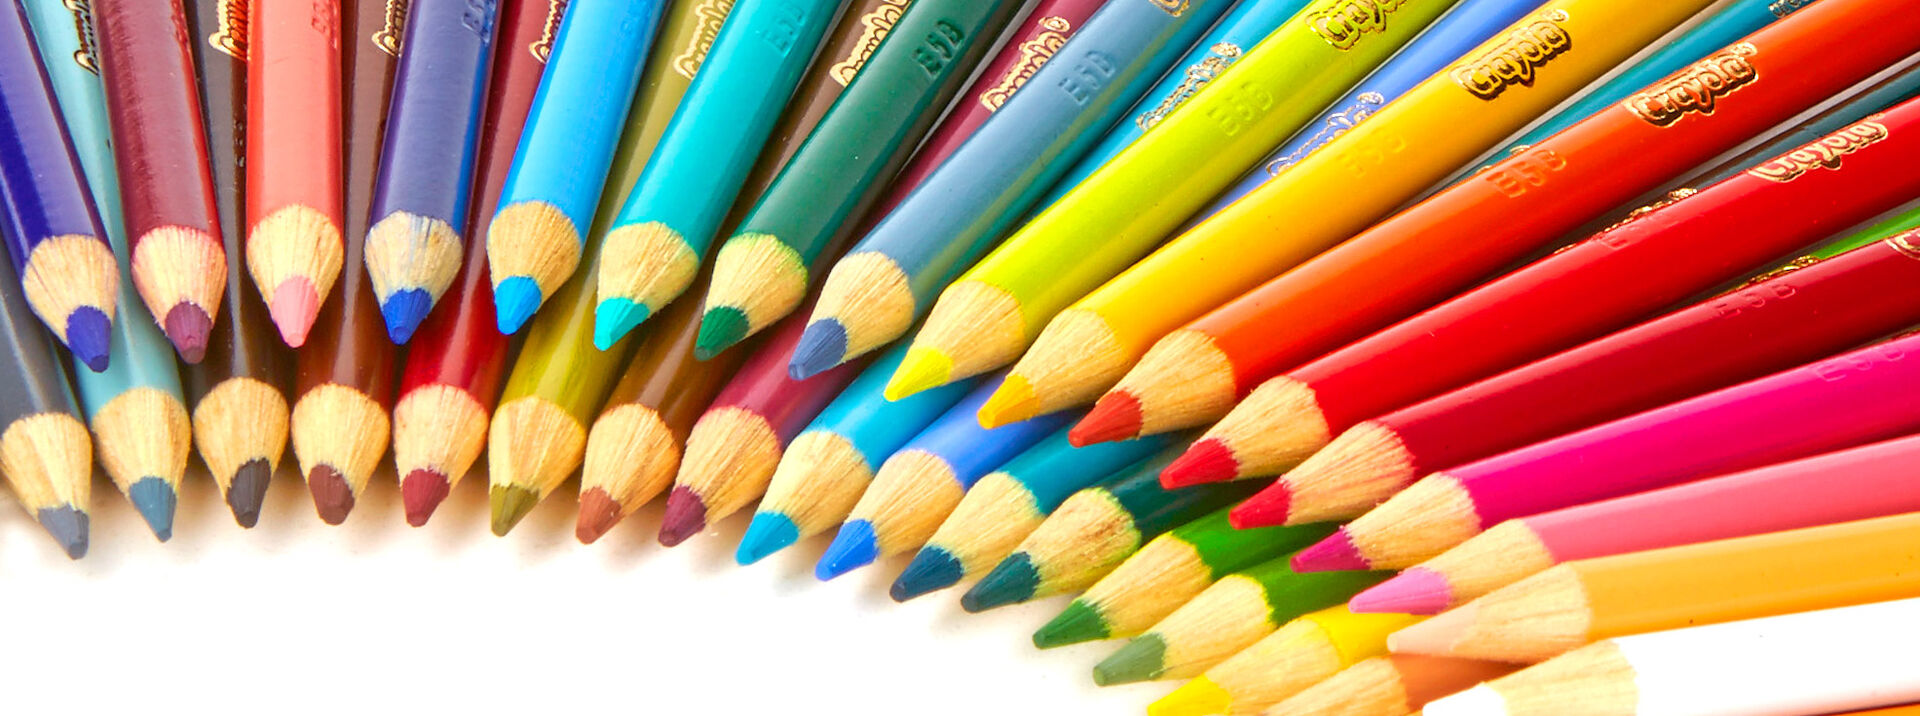 Seputarberitaduniakita: Colored Pencil